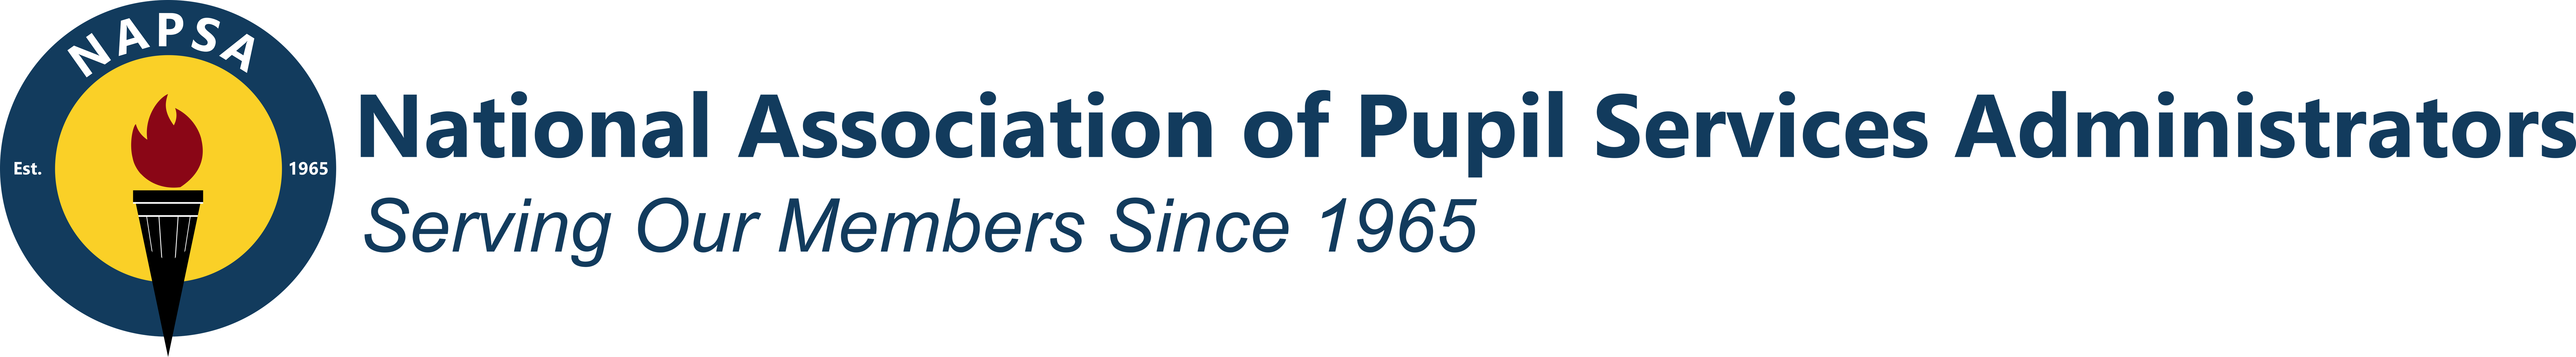 National Association of Pupil Services Administrators